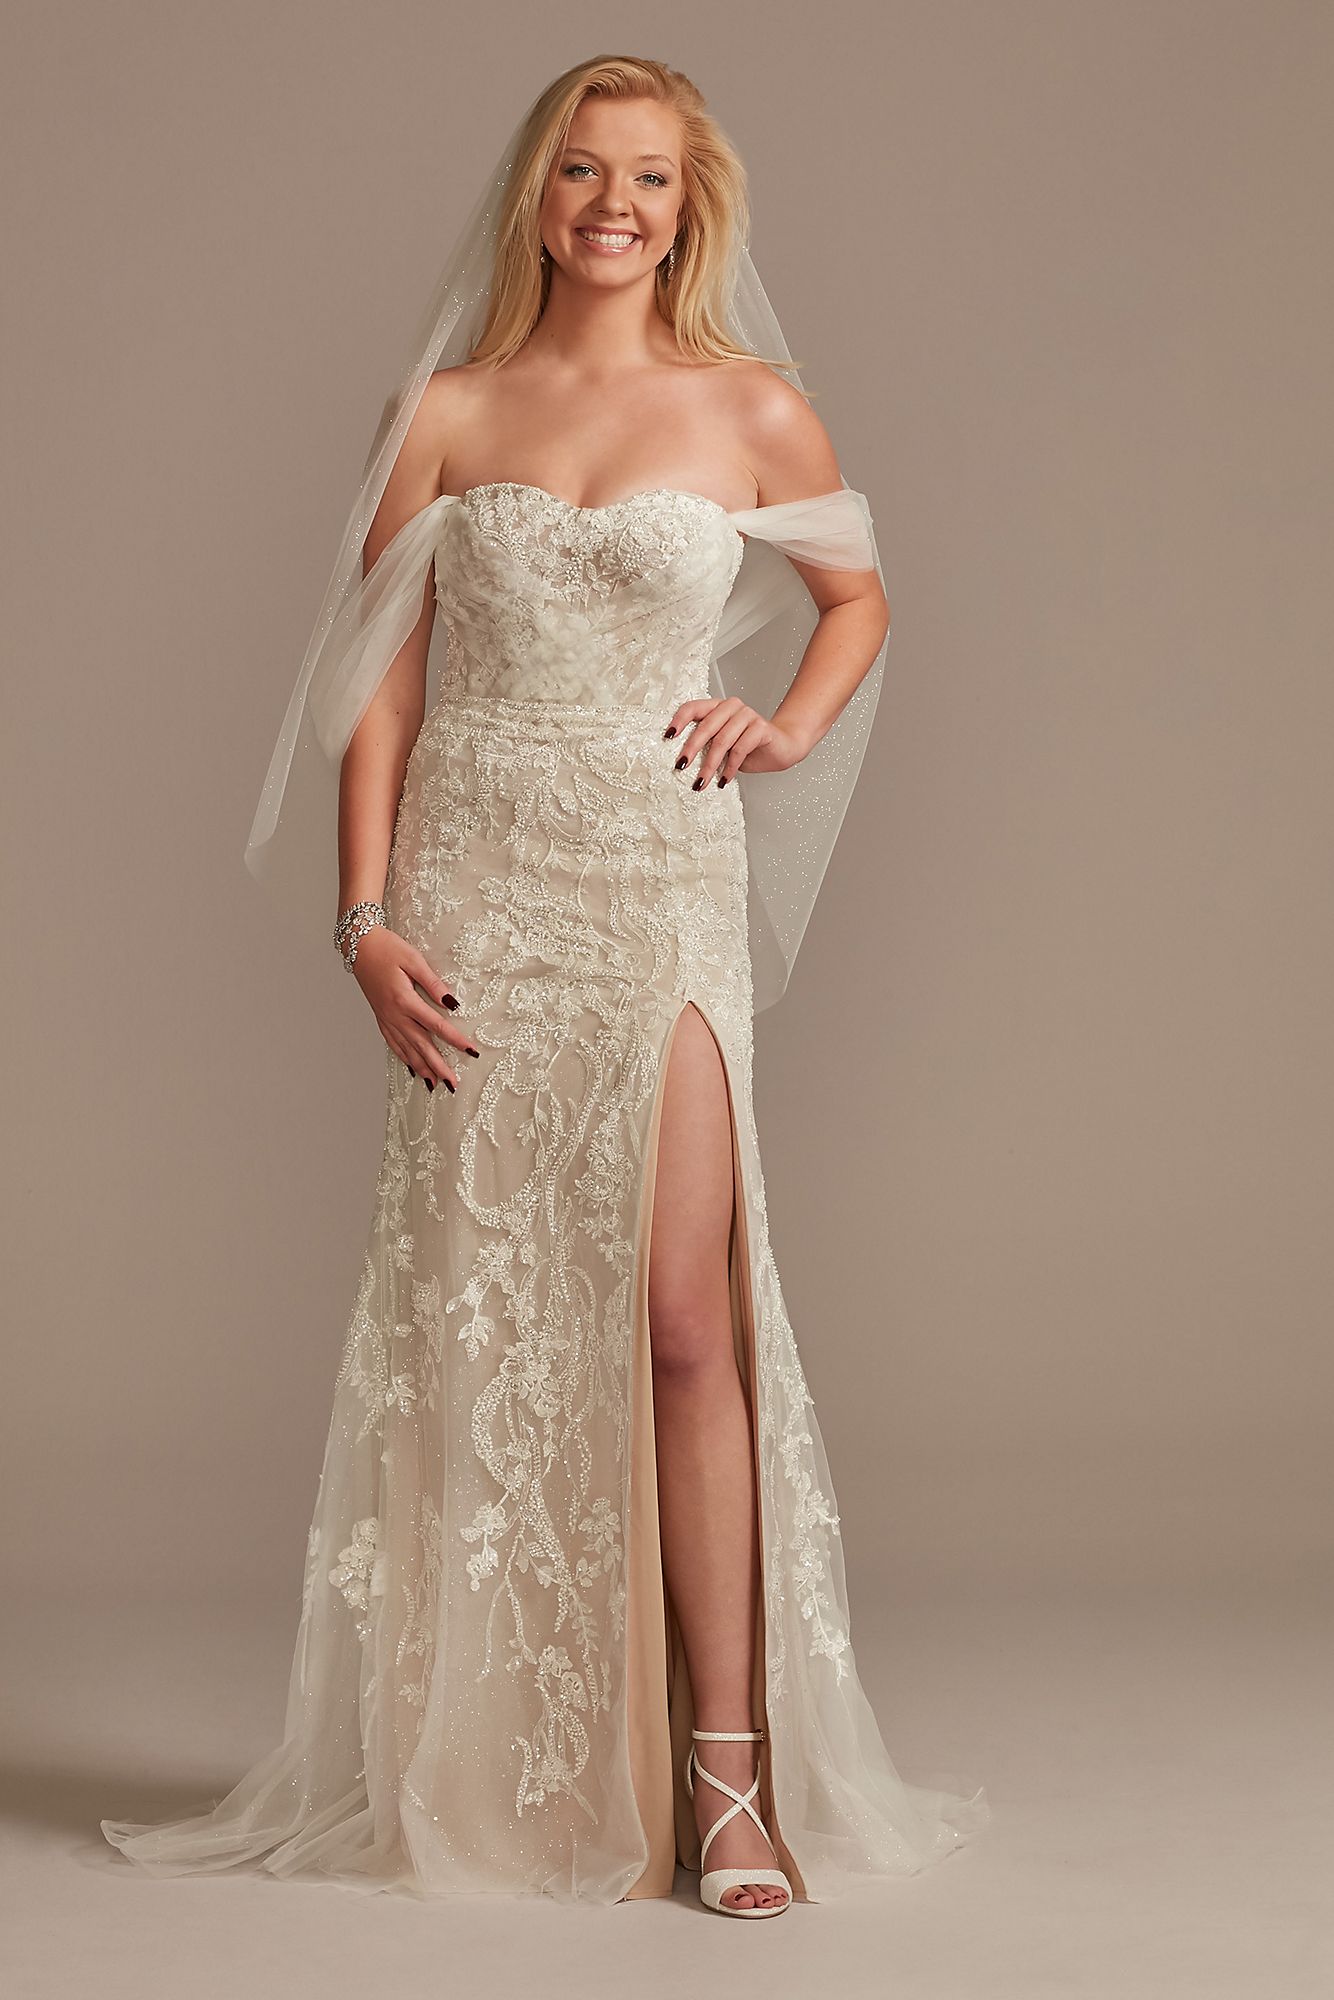 Detachable Sleeves and Train Tulle Wedding Dress Galina Signature LSSWG881